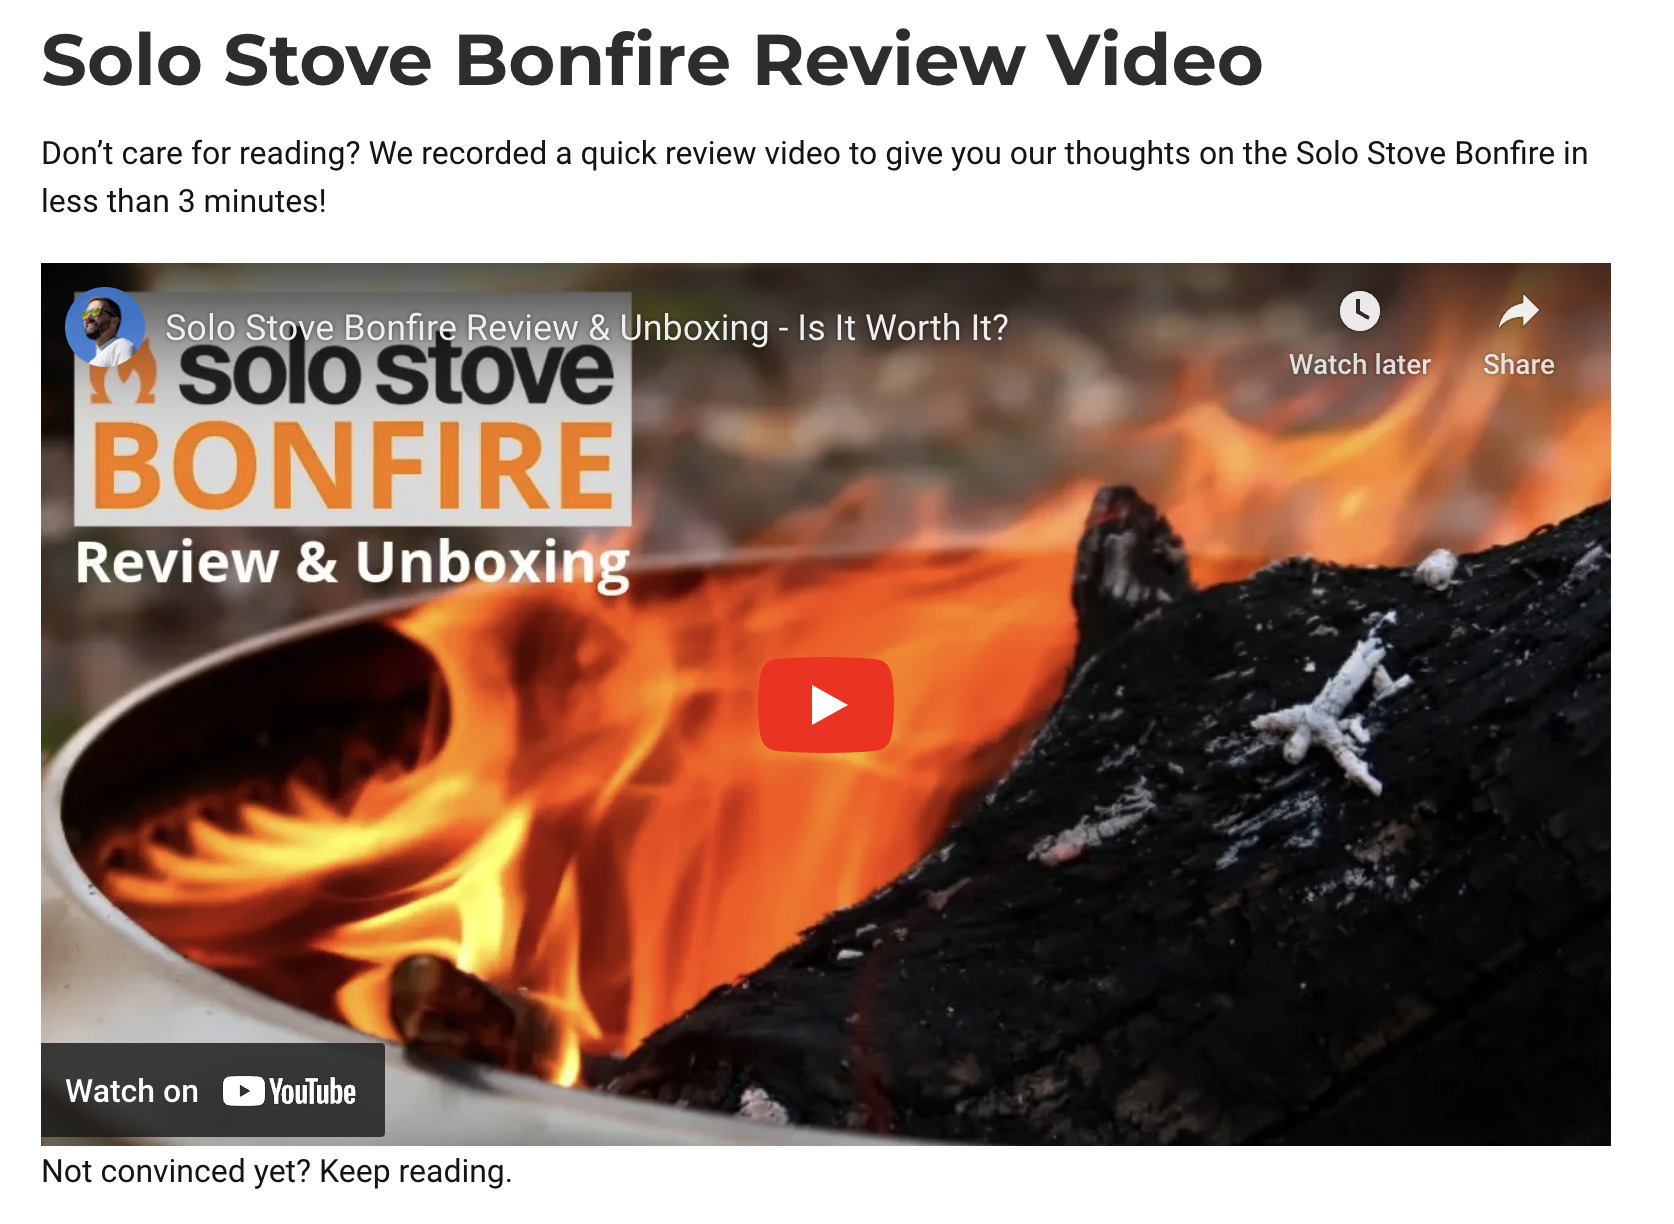 Solo Stove bonfire review ejemplo de marketing de afiliados